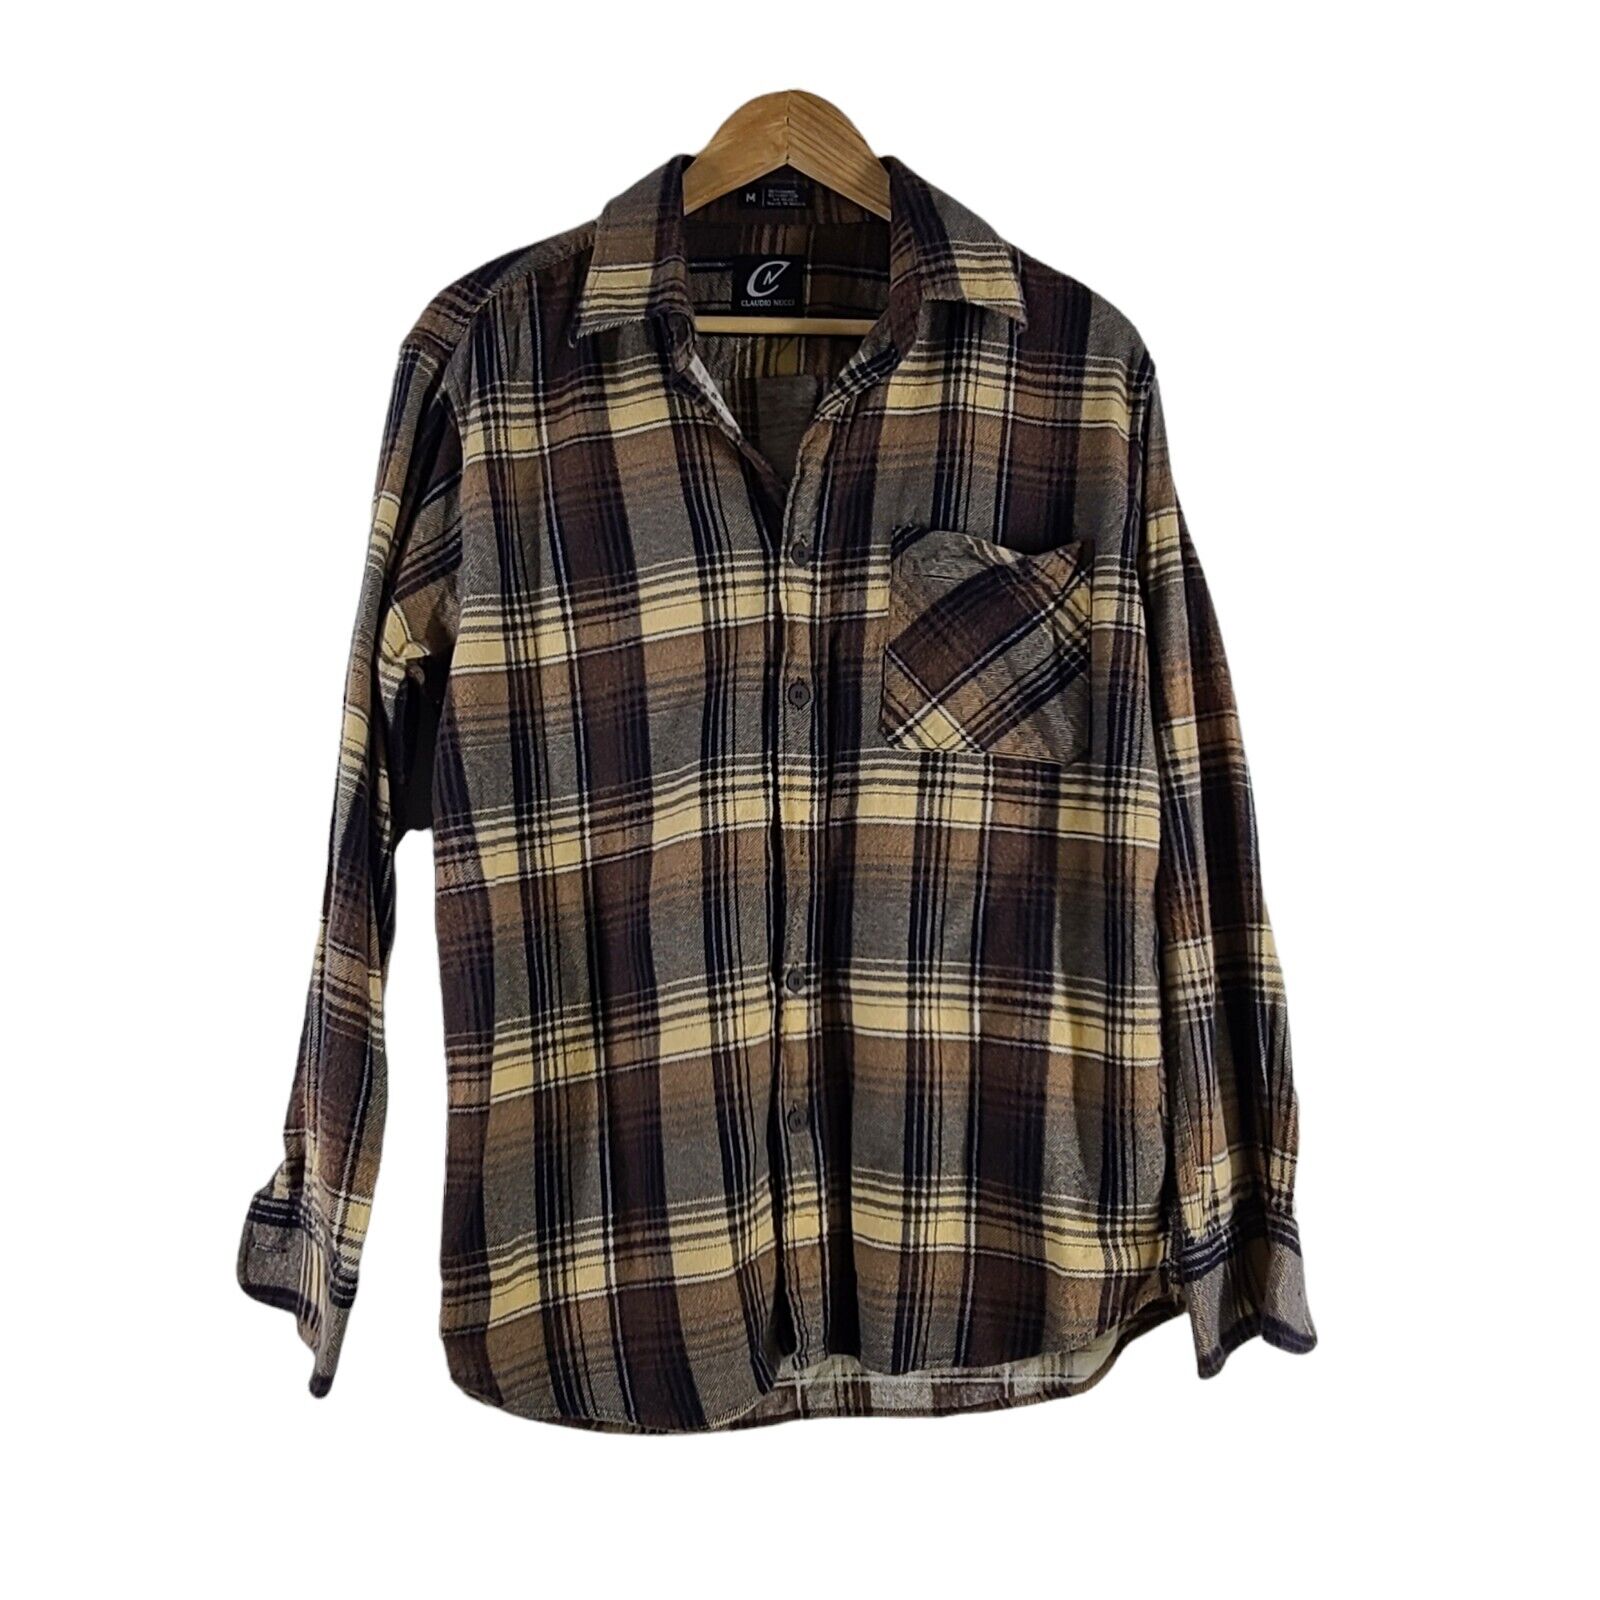 Claudio Nucci Flannel Shirt Brown Plaid Long Sleeve Medium | eBay